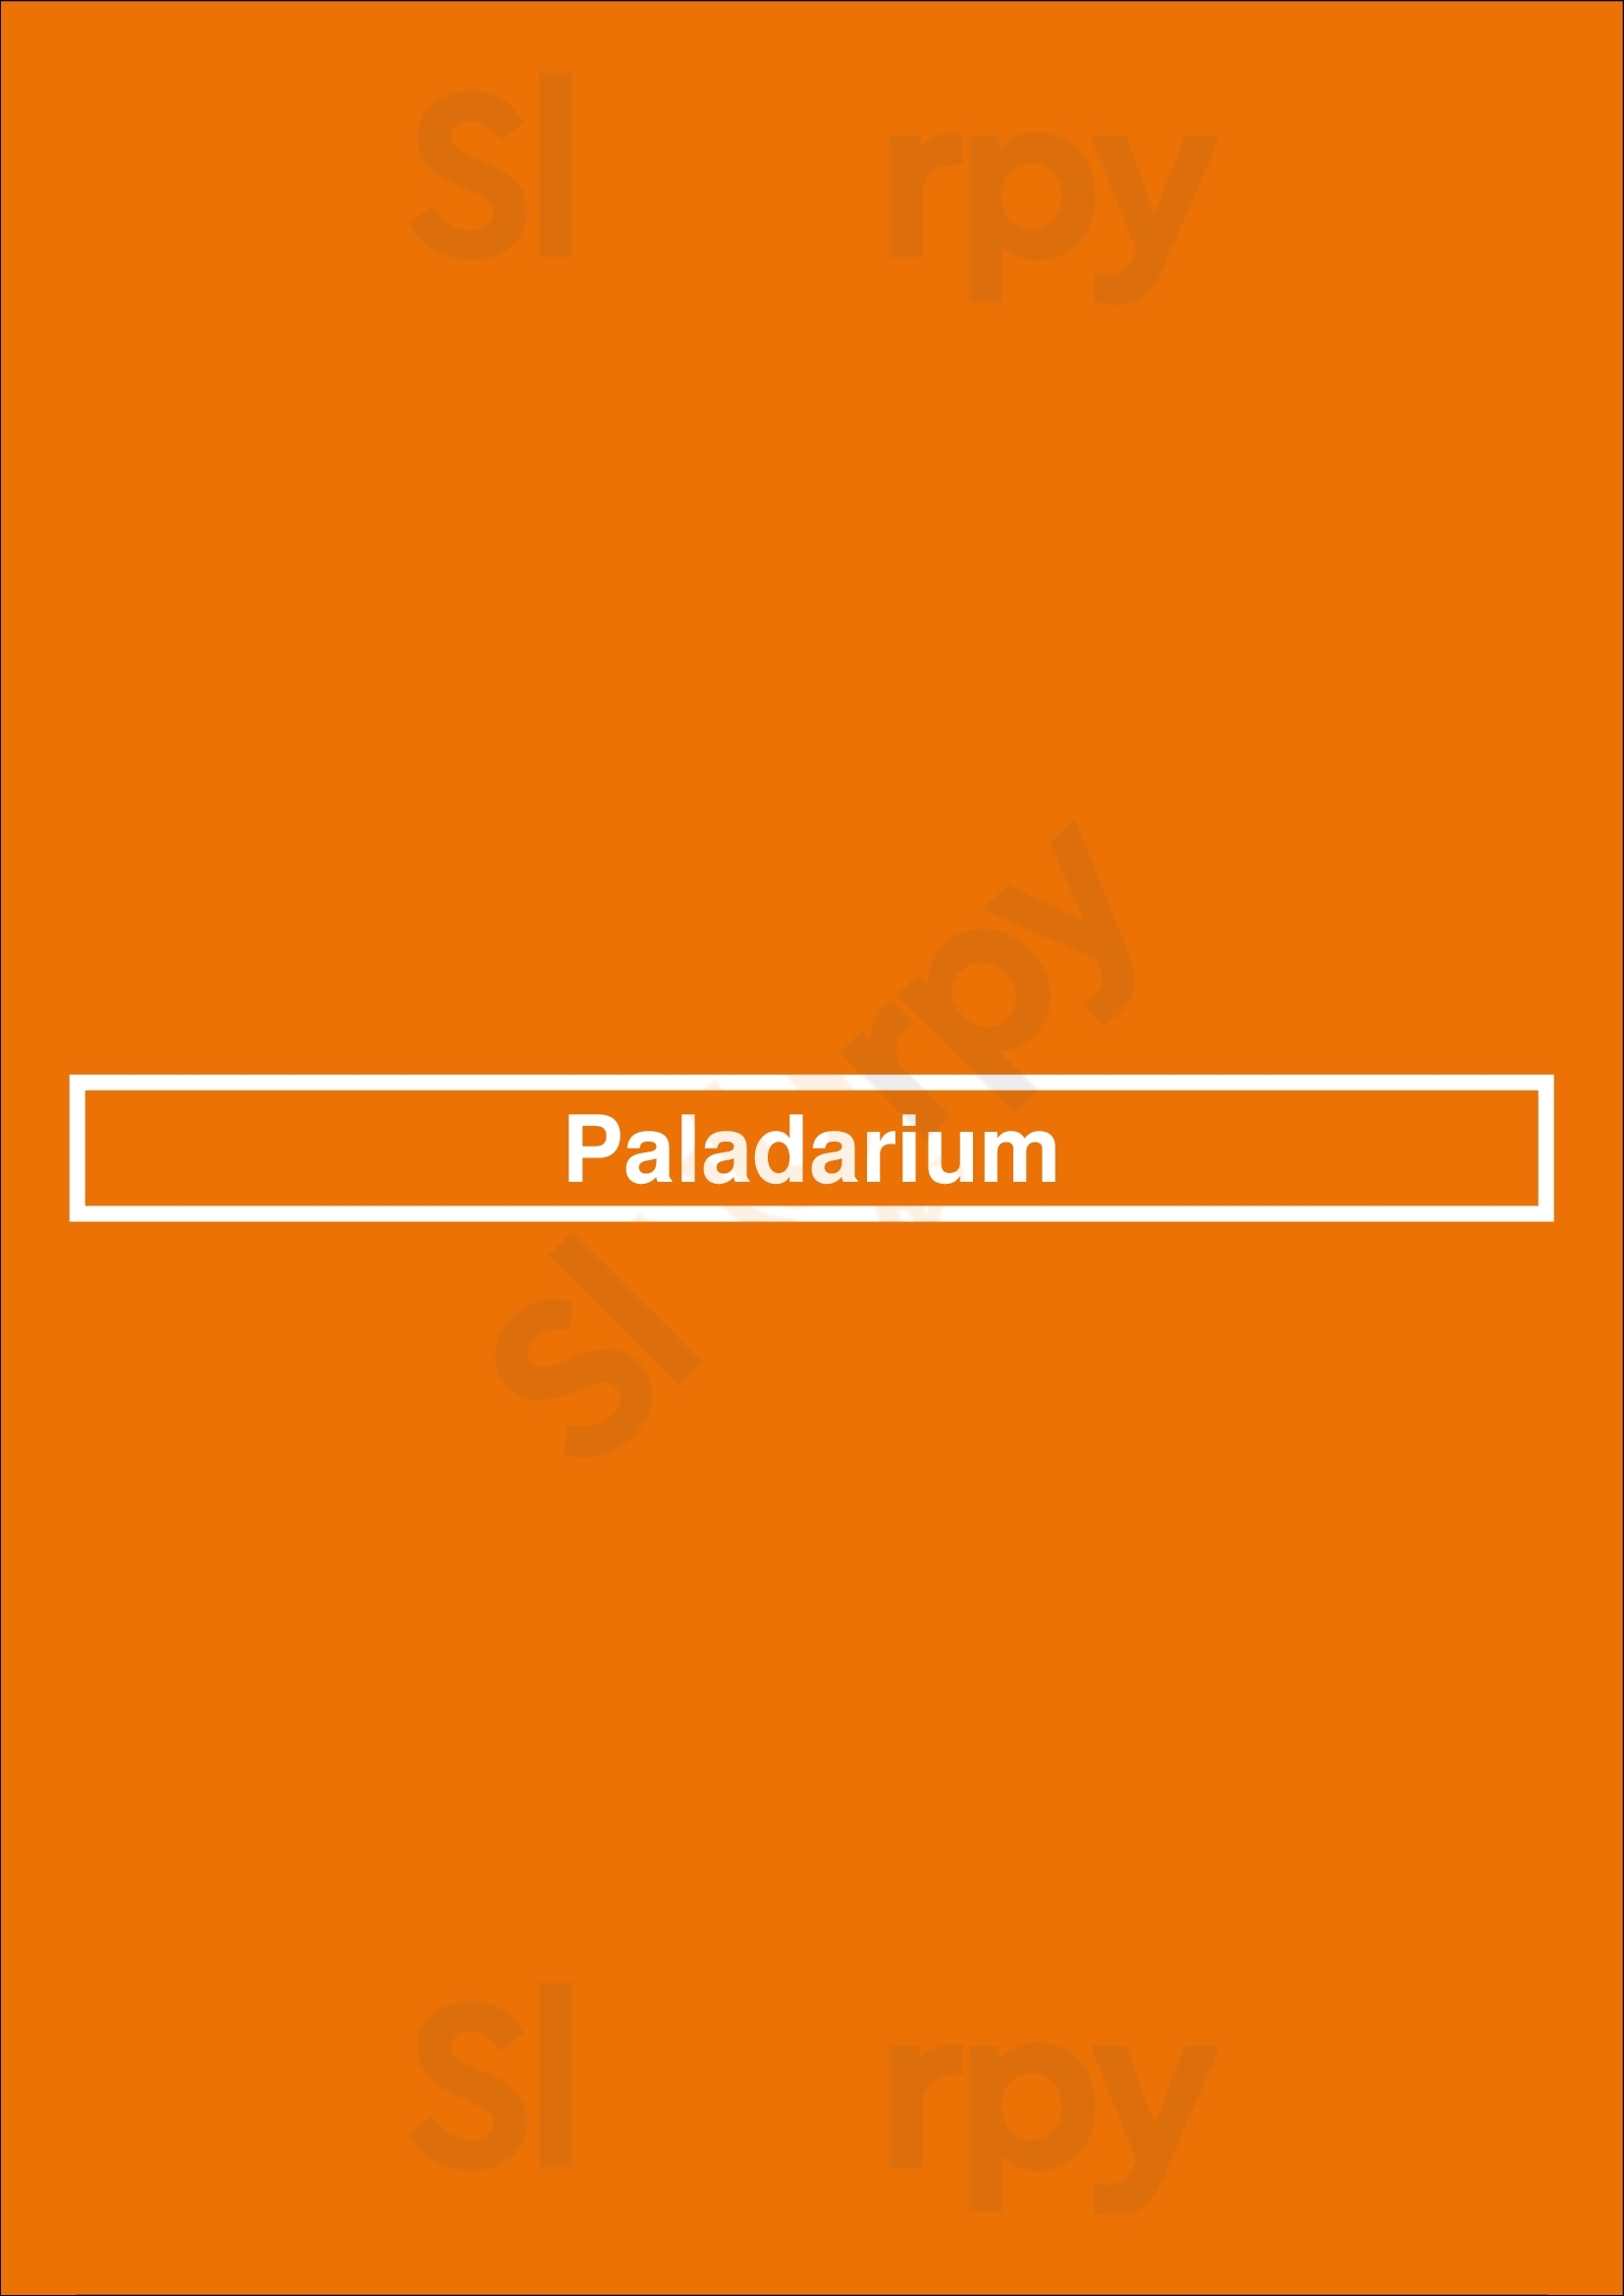 Paladarium Lisboa Menu - 1